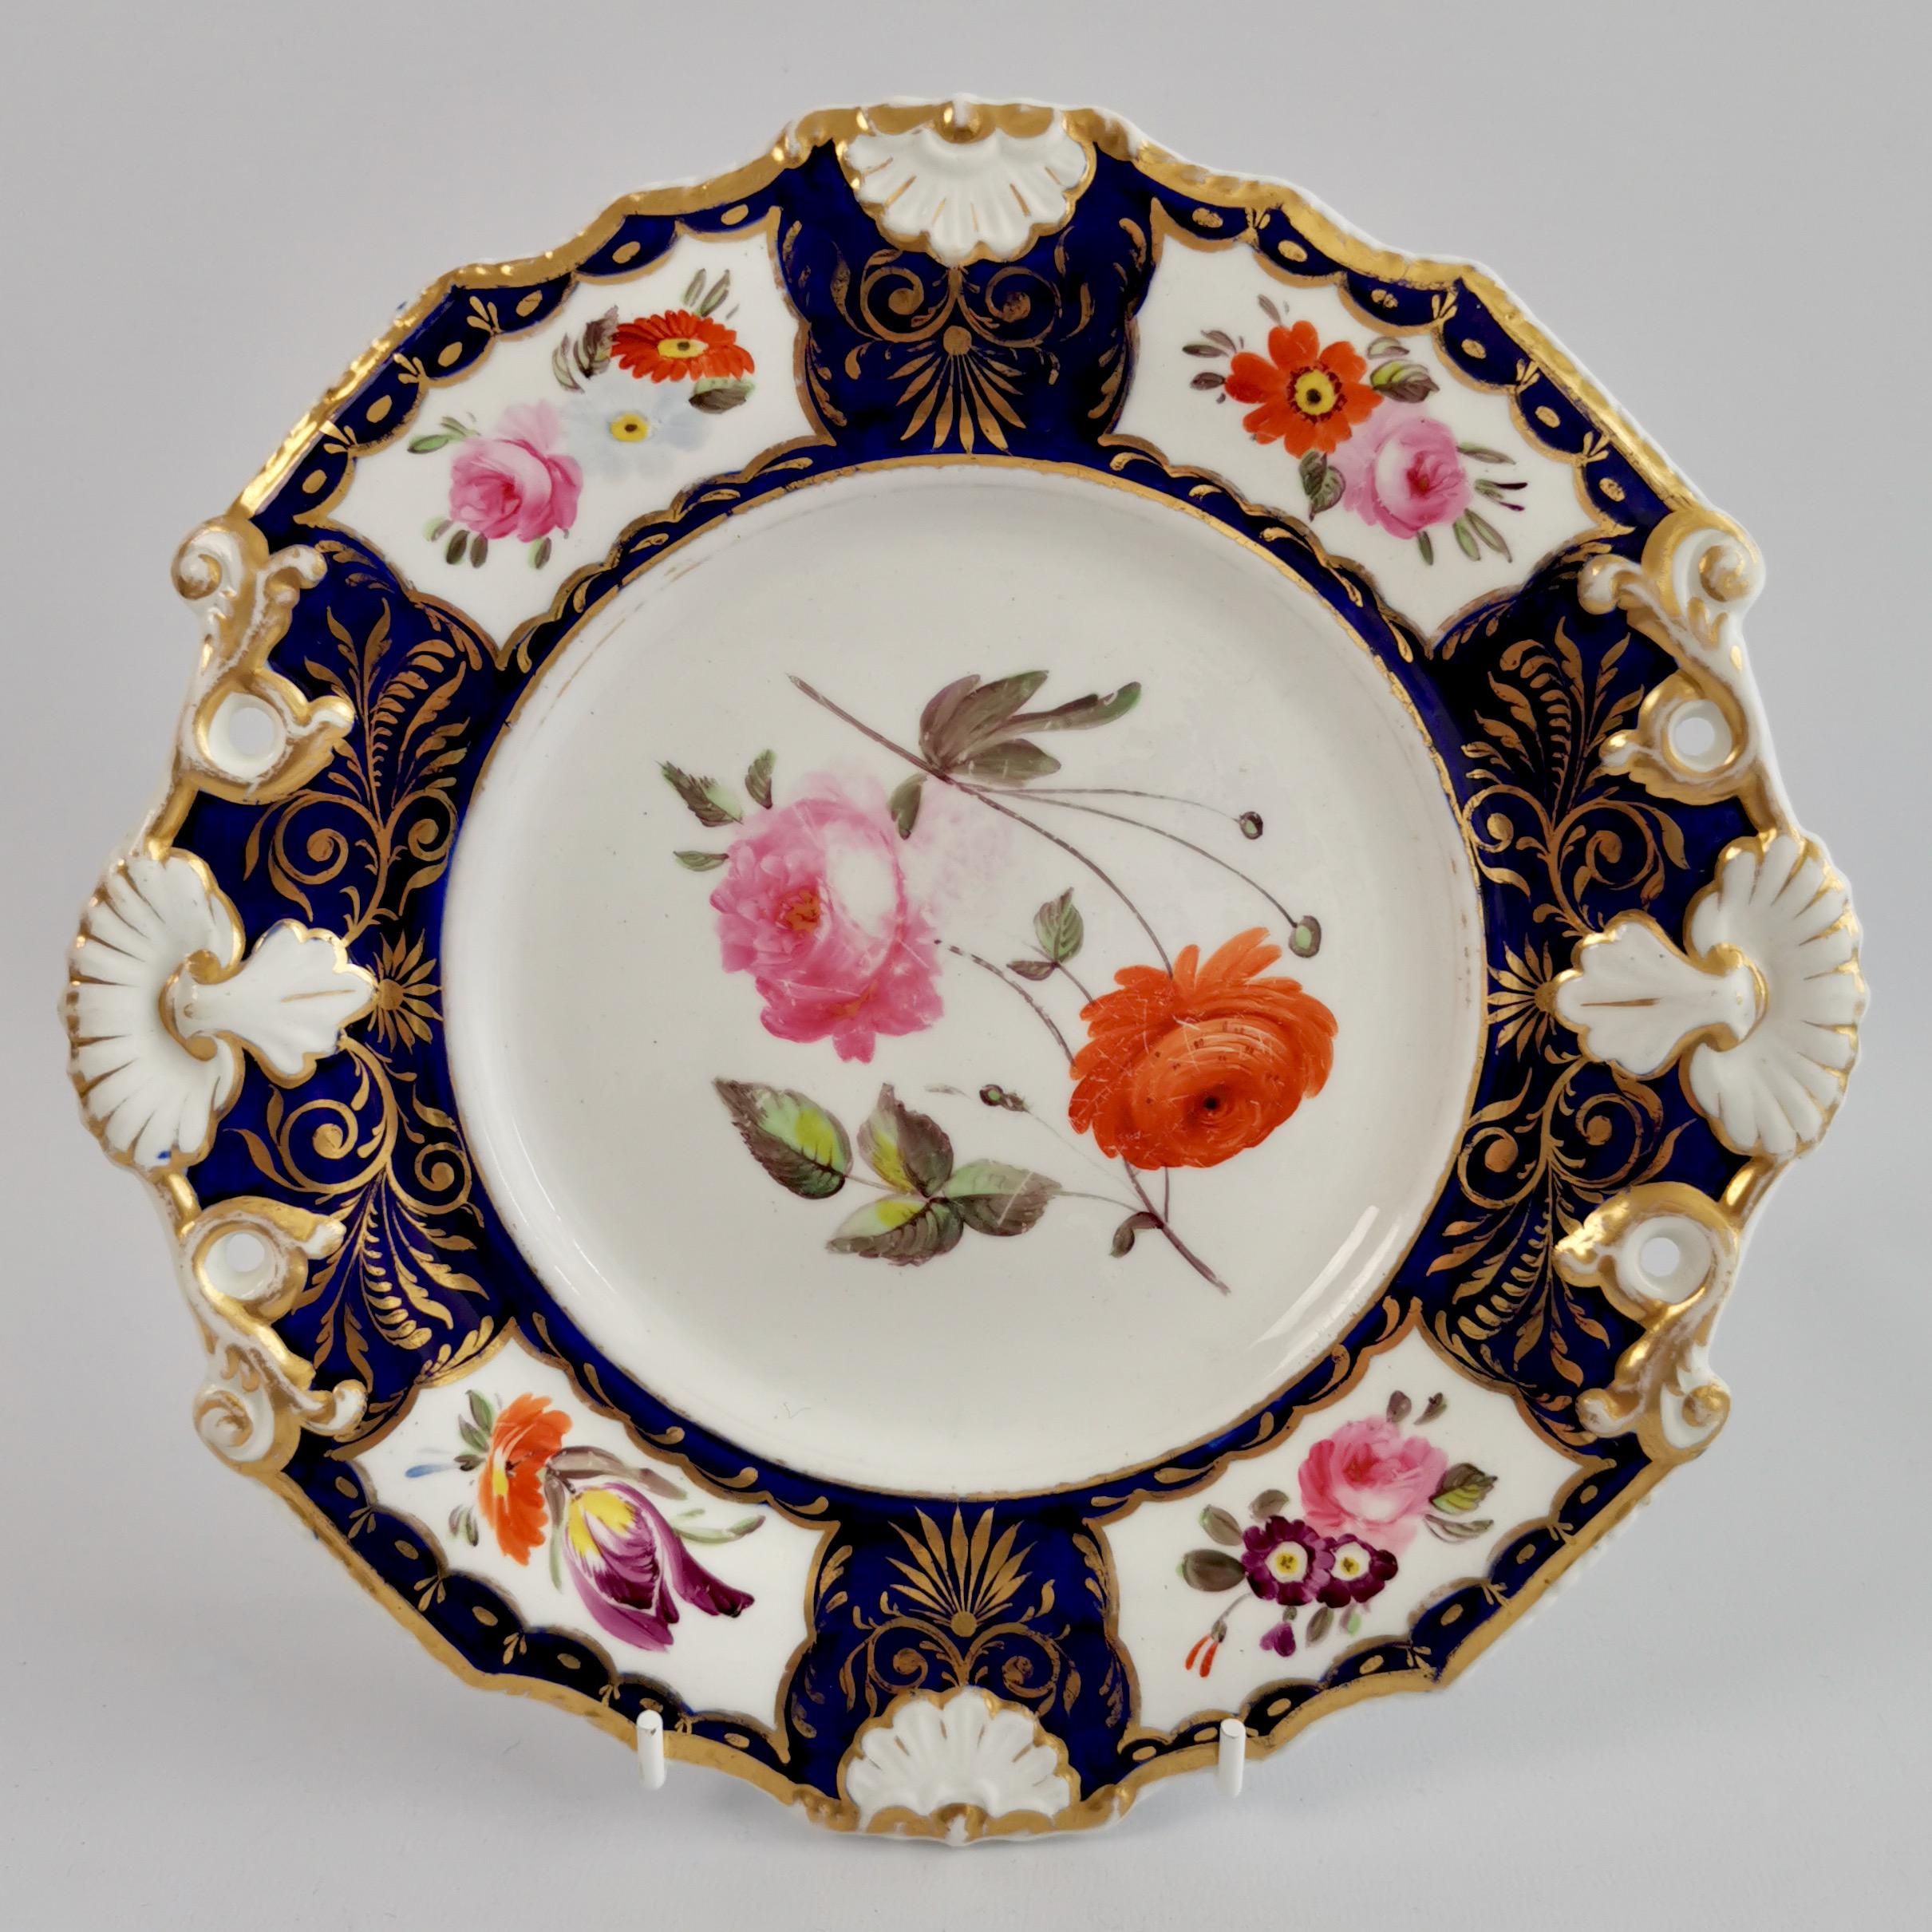 New Hall Porcelain Part Dessert Service, Cobalt Blue, Flowers, Regency 1824-1830 1